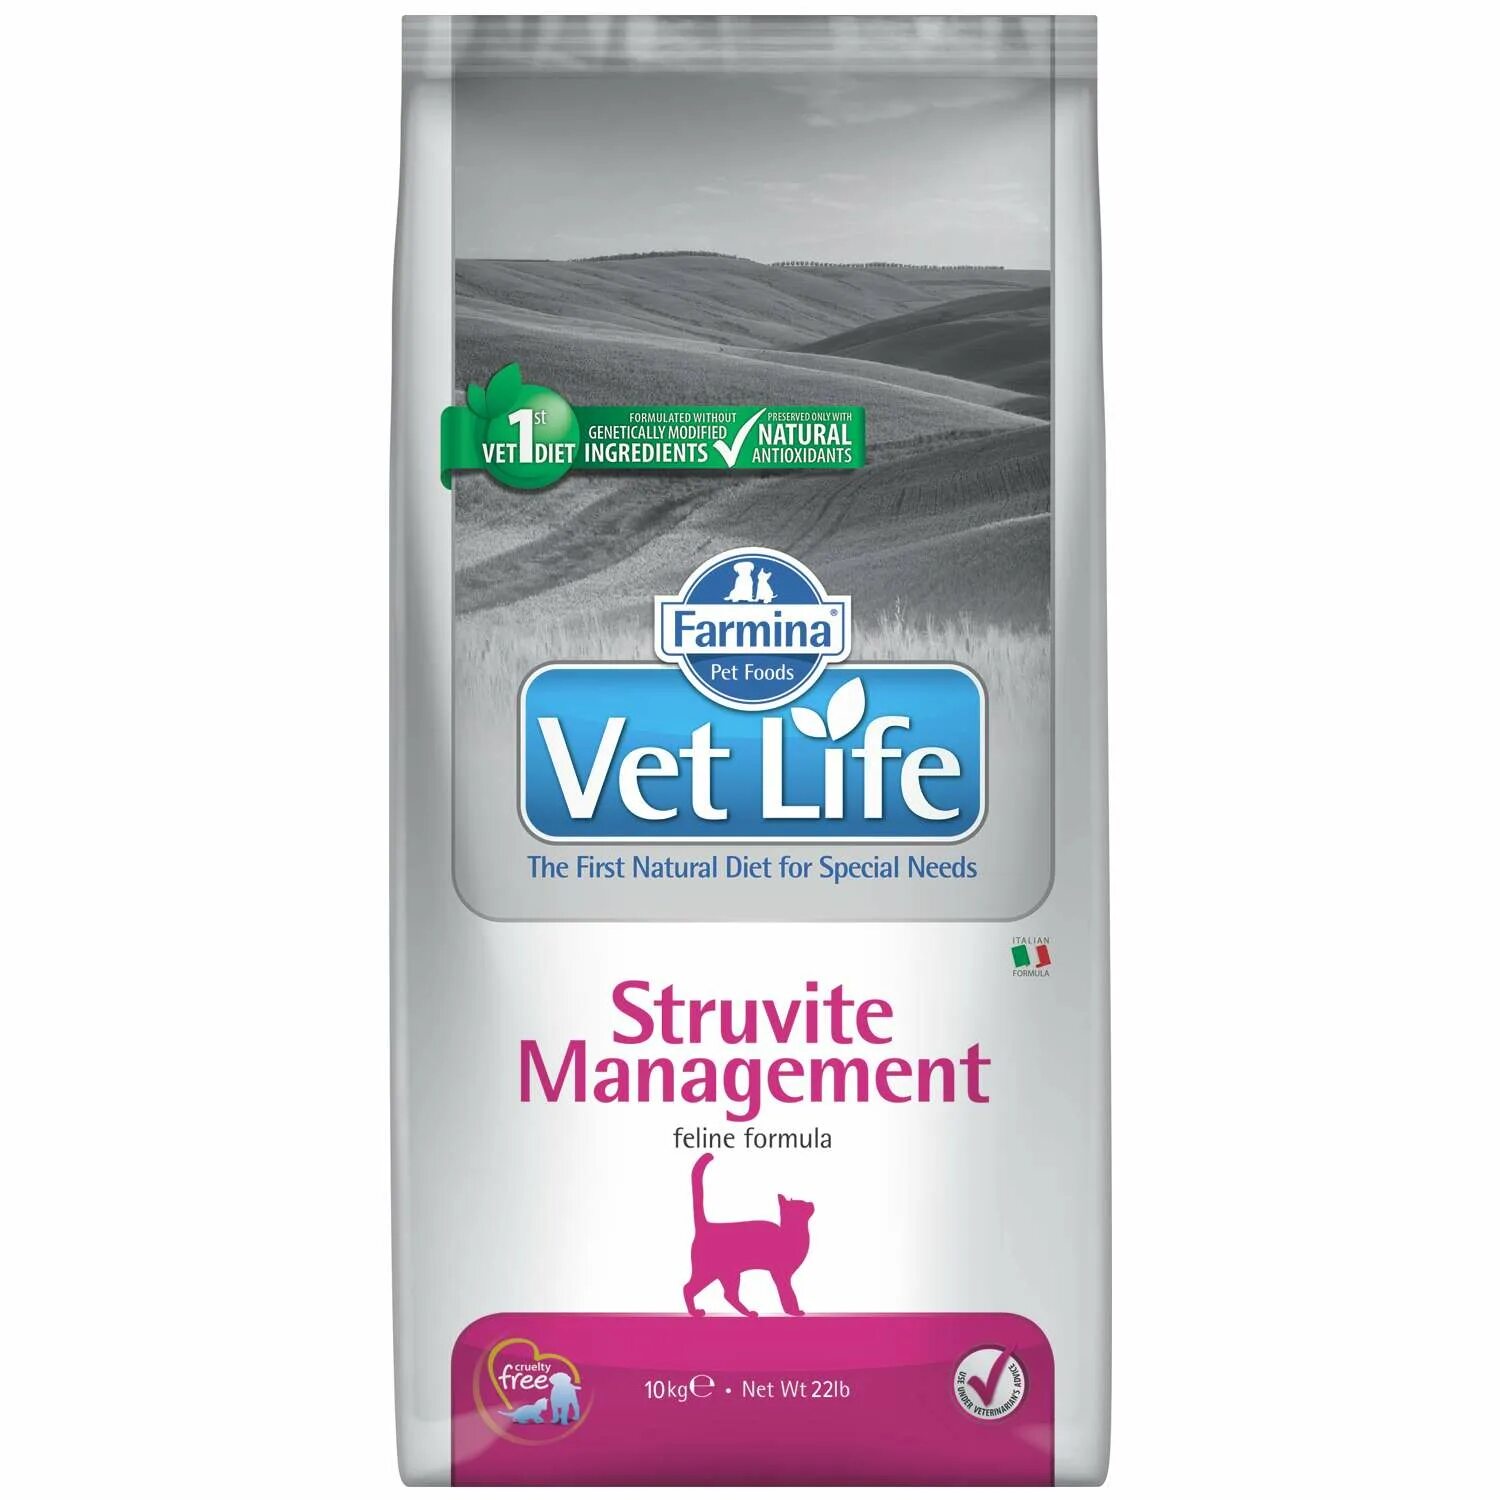 Vet life 10 кг. Vet Life Struvite корм для кошек. Farmina vet Life Cat Struvite 10 кг. Vet Life Struvite Management для стерилизованных кошек. Vet Life Struvite Management для кошек.